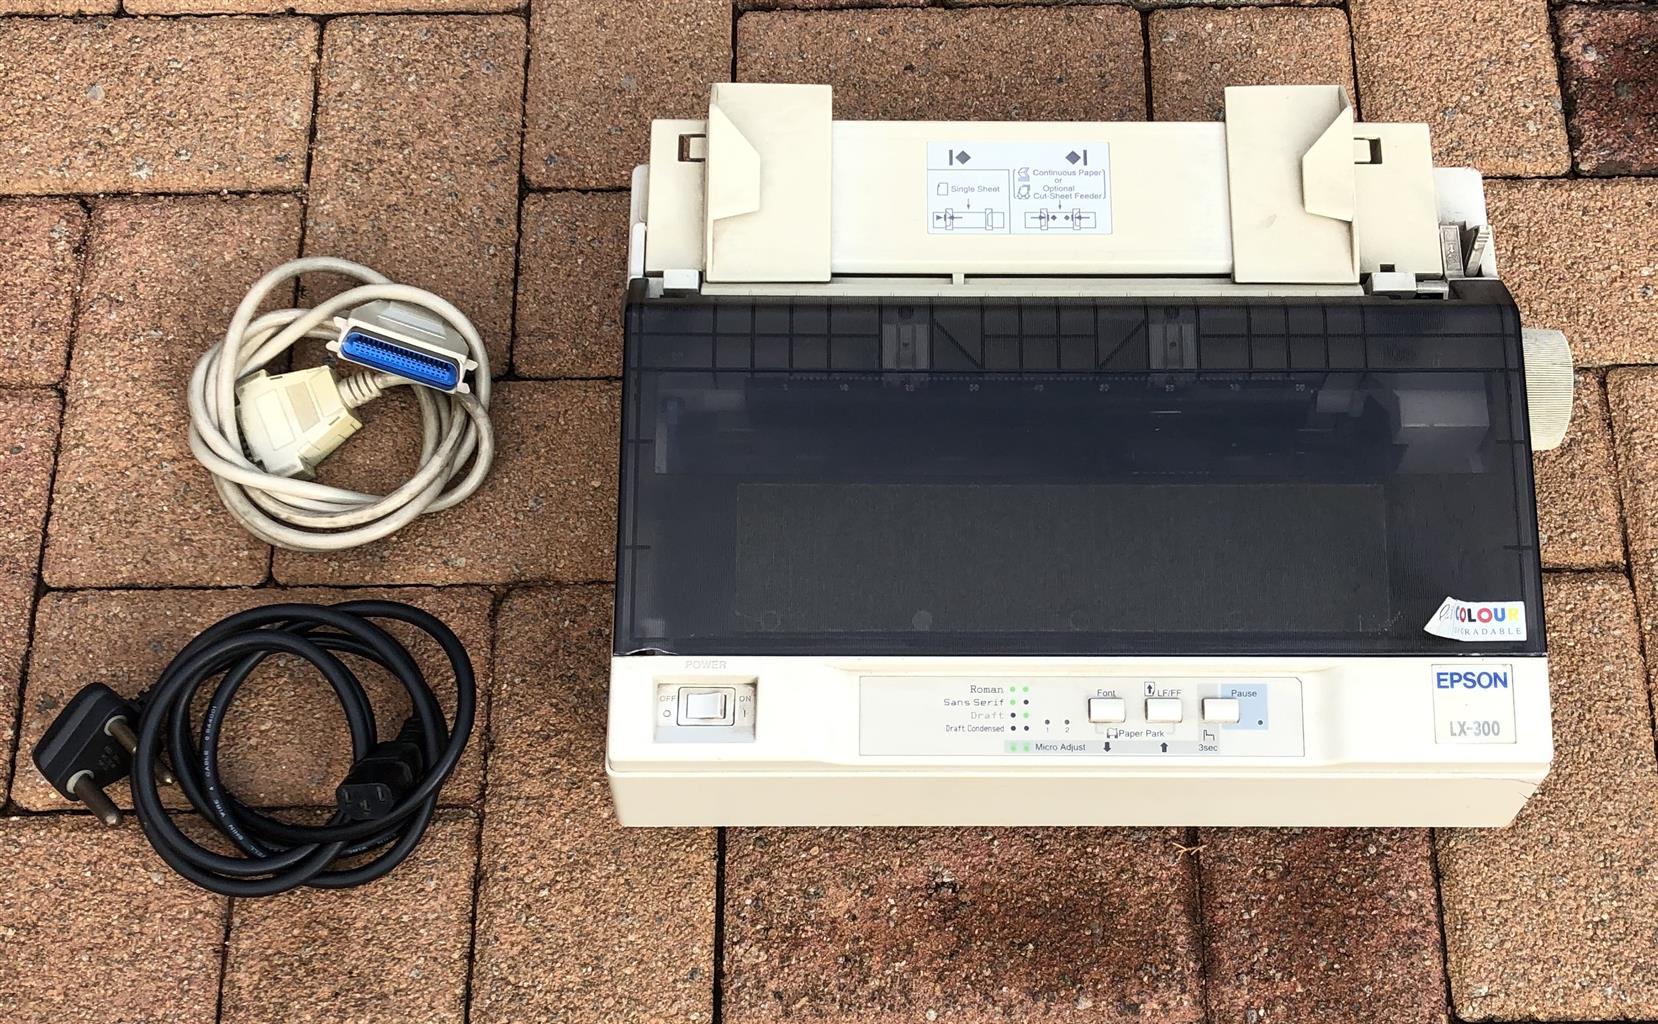 Epson printer LX-300 model P850A